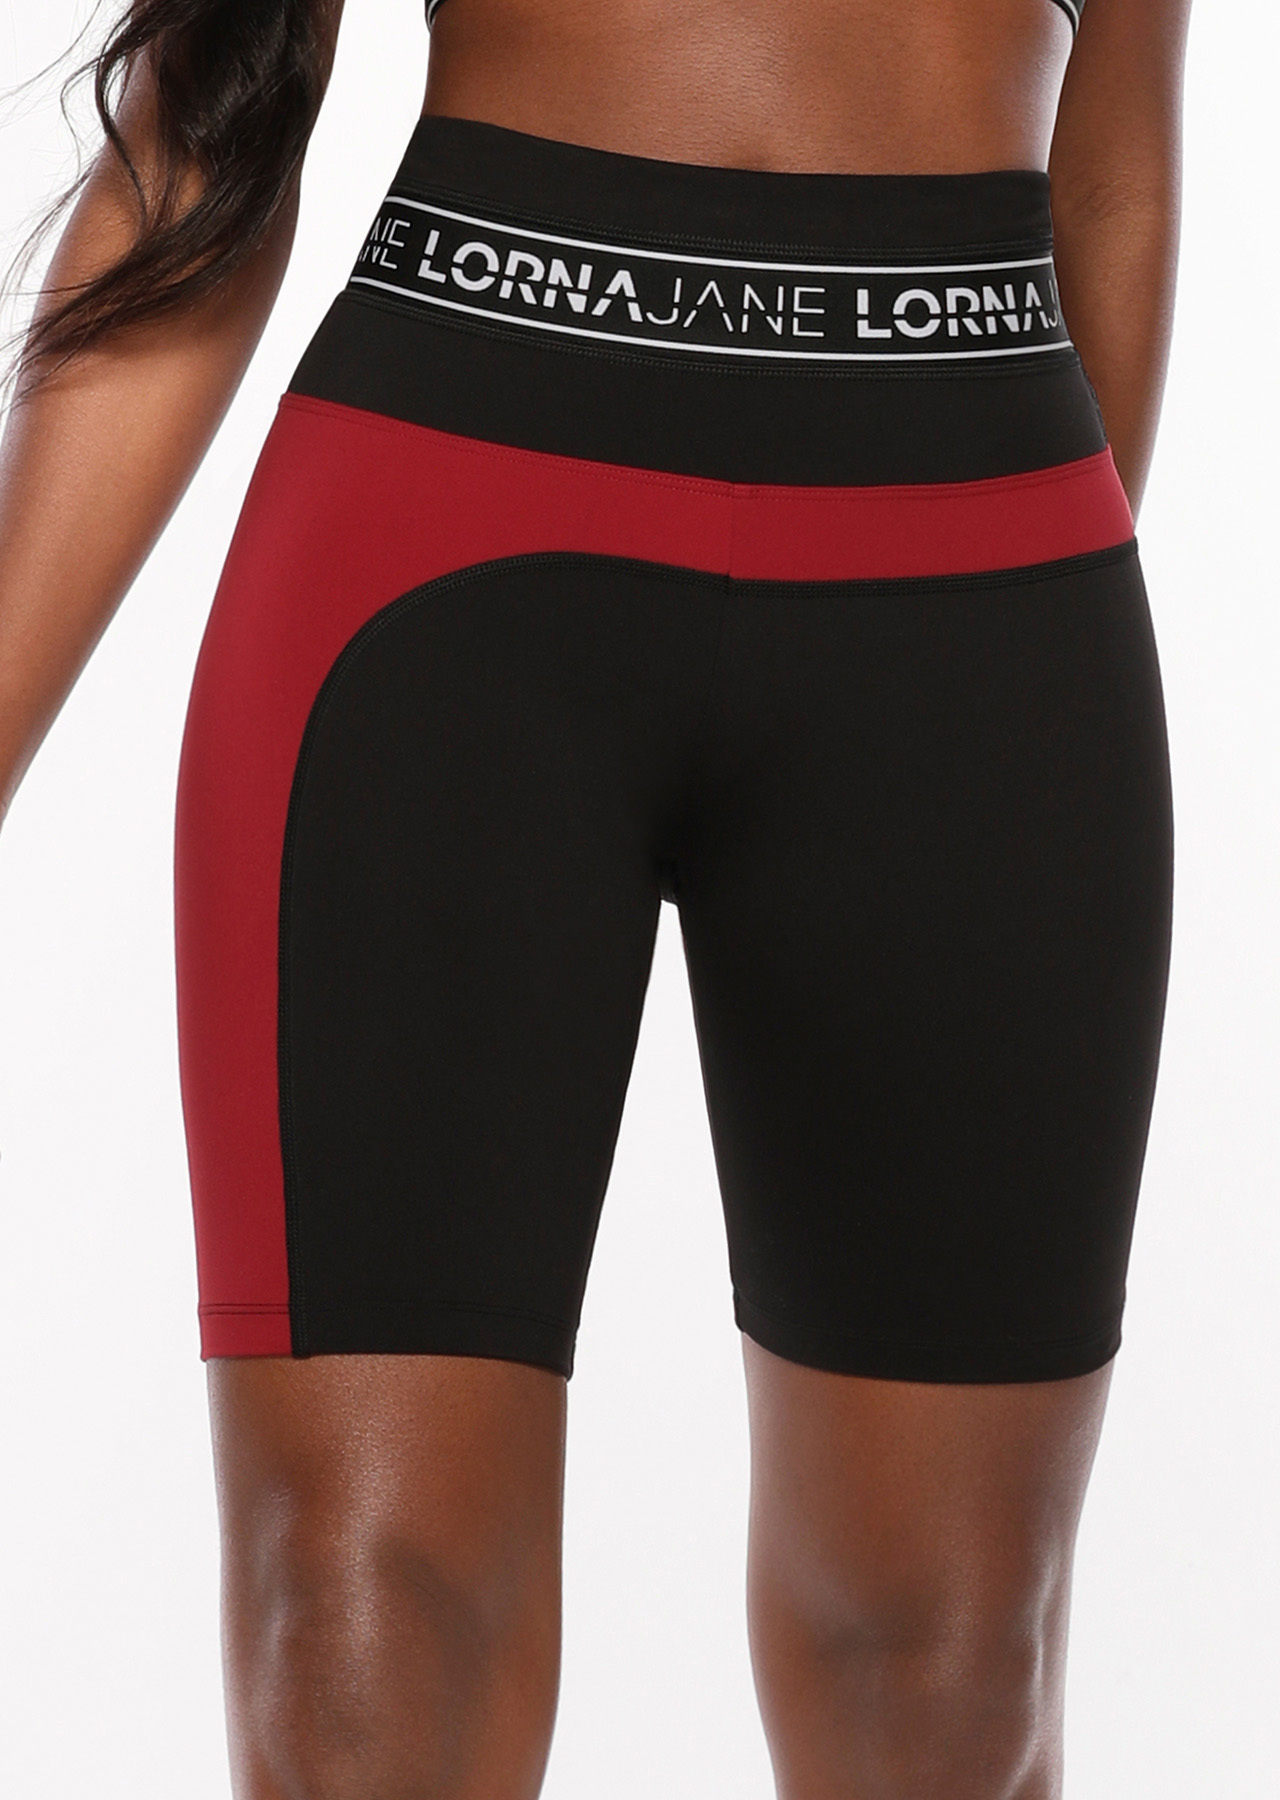 lorna jane biker shorts